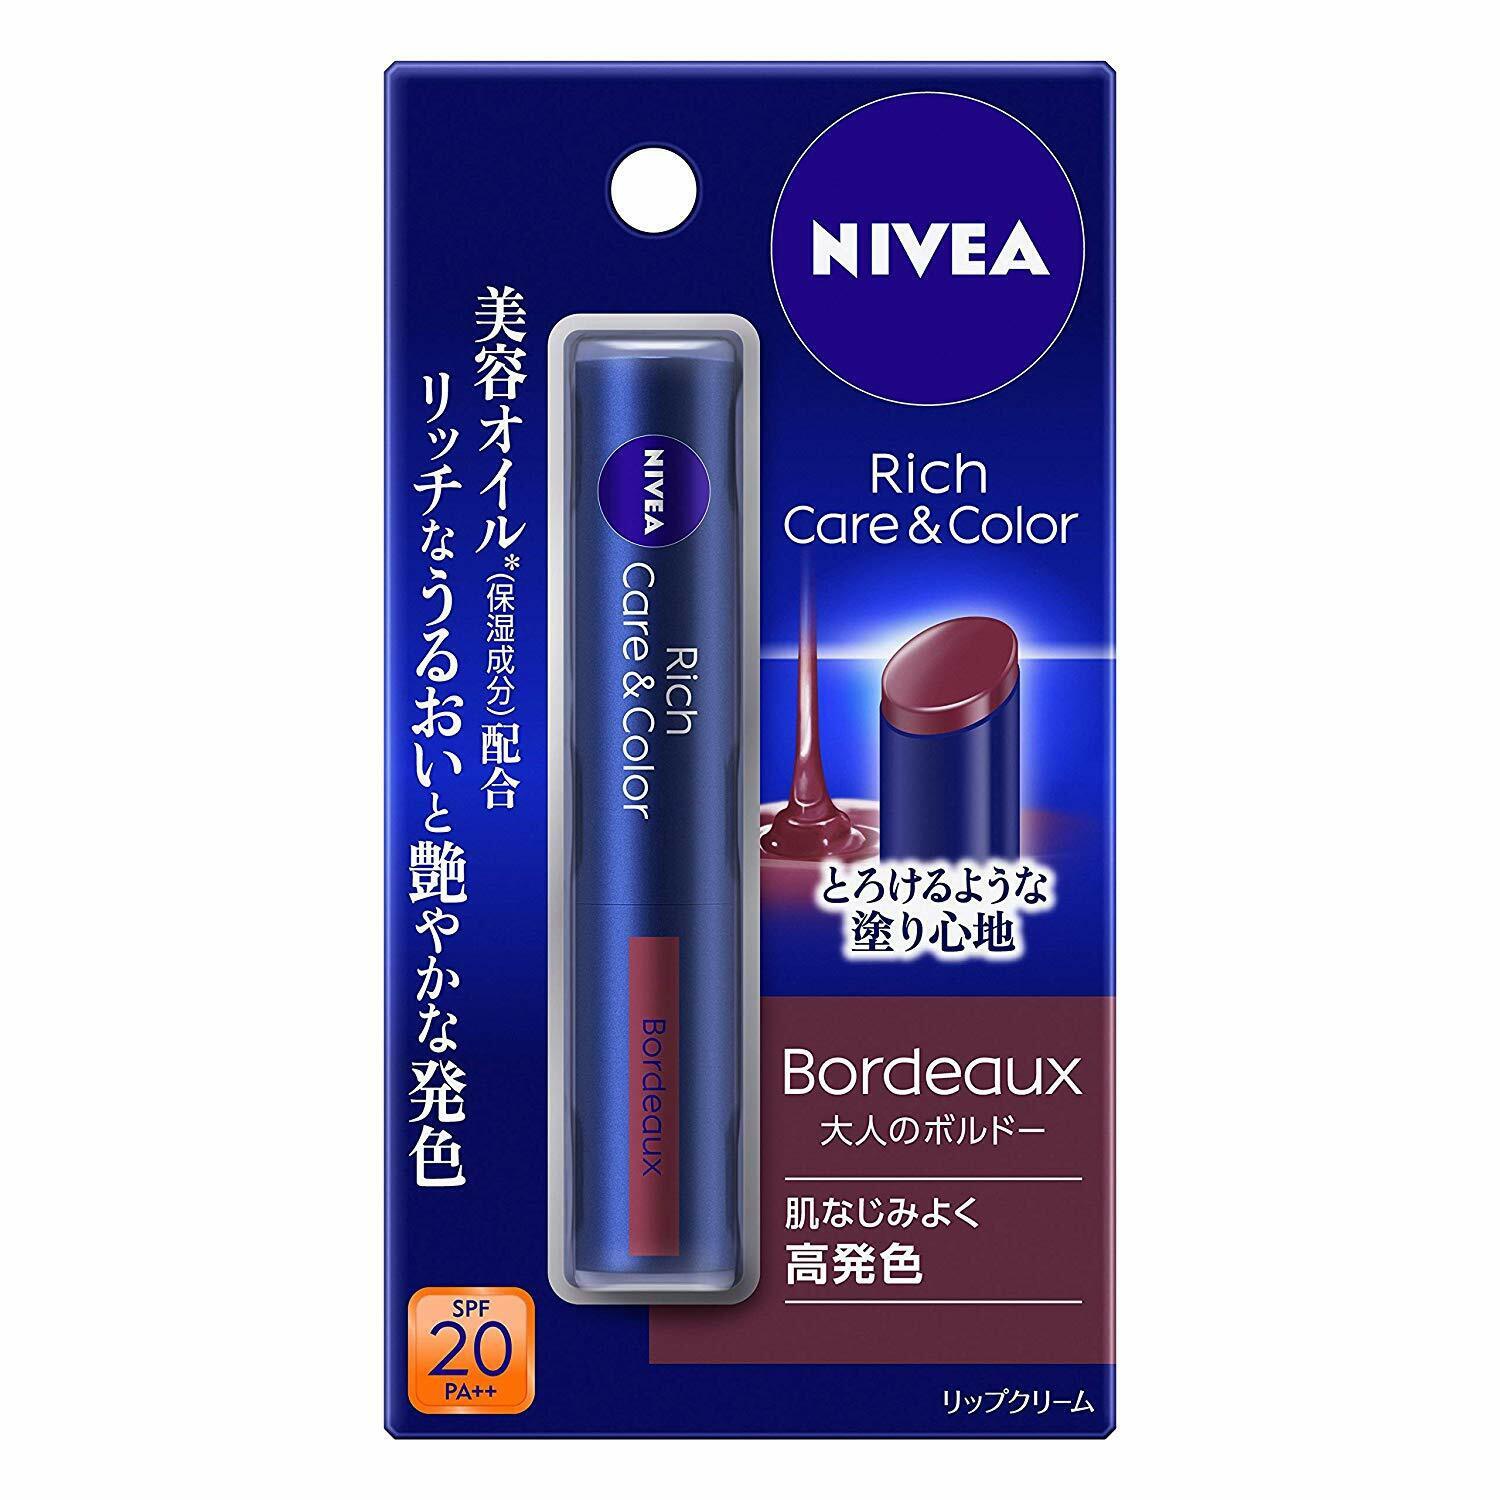 Nivea Japan Rich Care & Color Lip Balm SPF 20 PA++